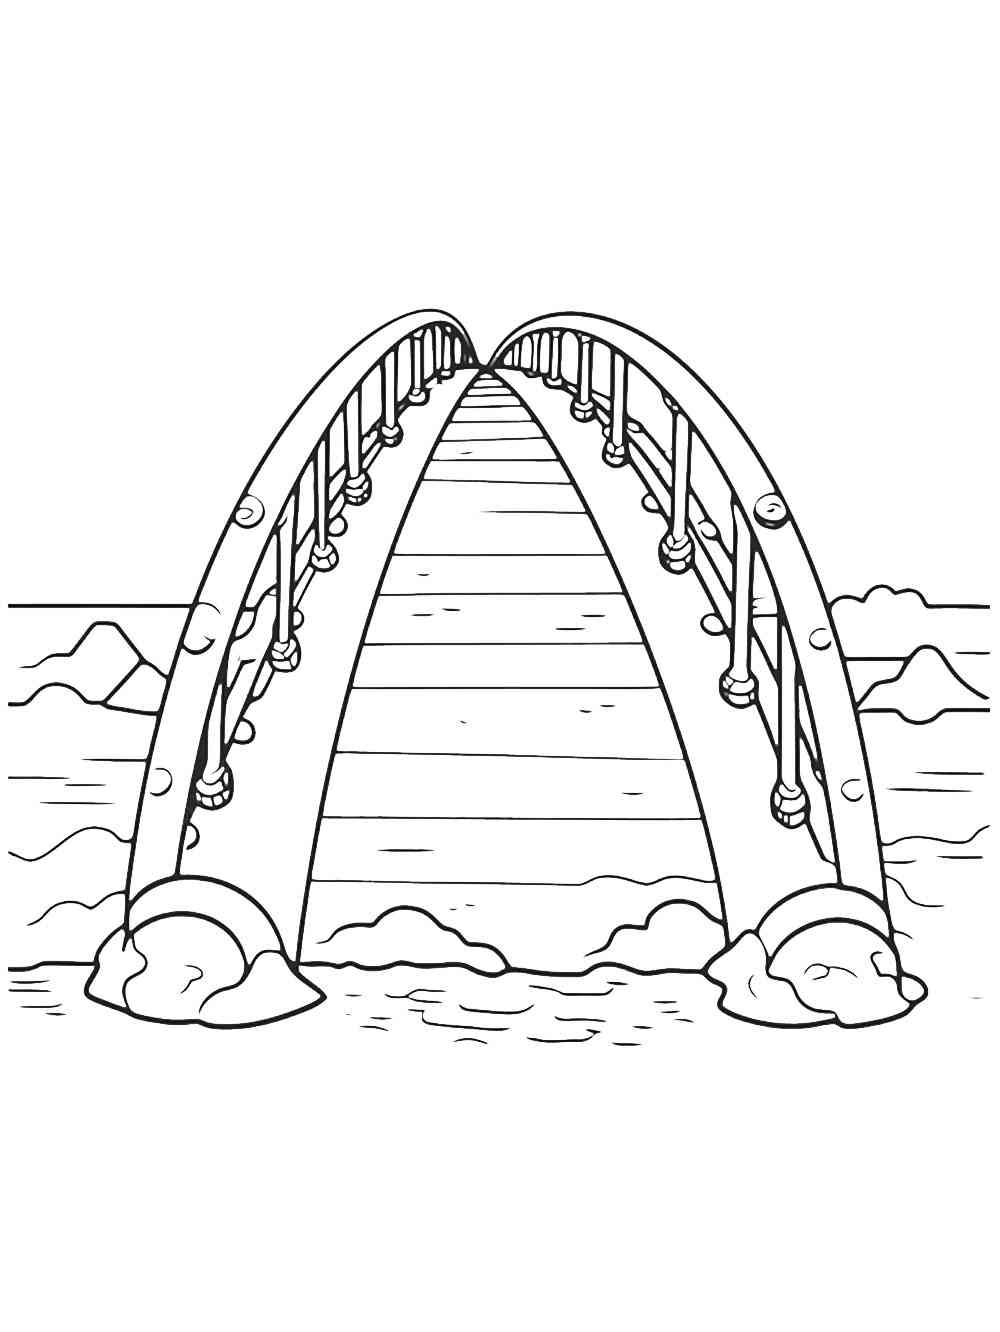 Bridge coloring pages. Download and print Bridge coloring pages